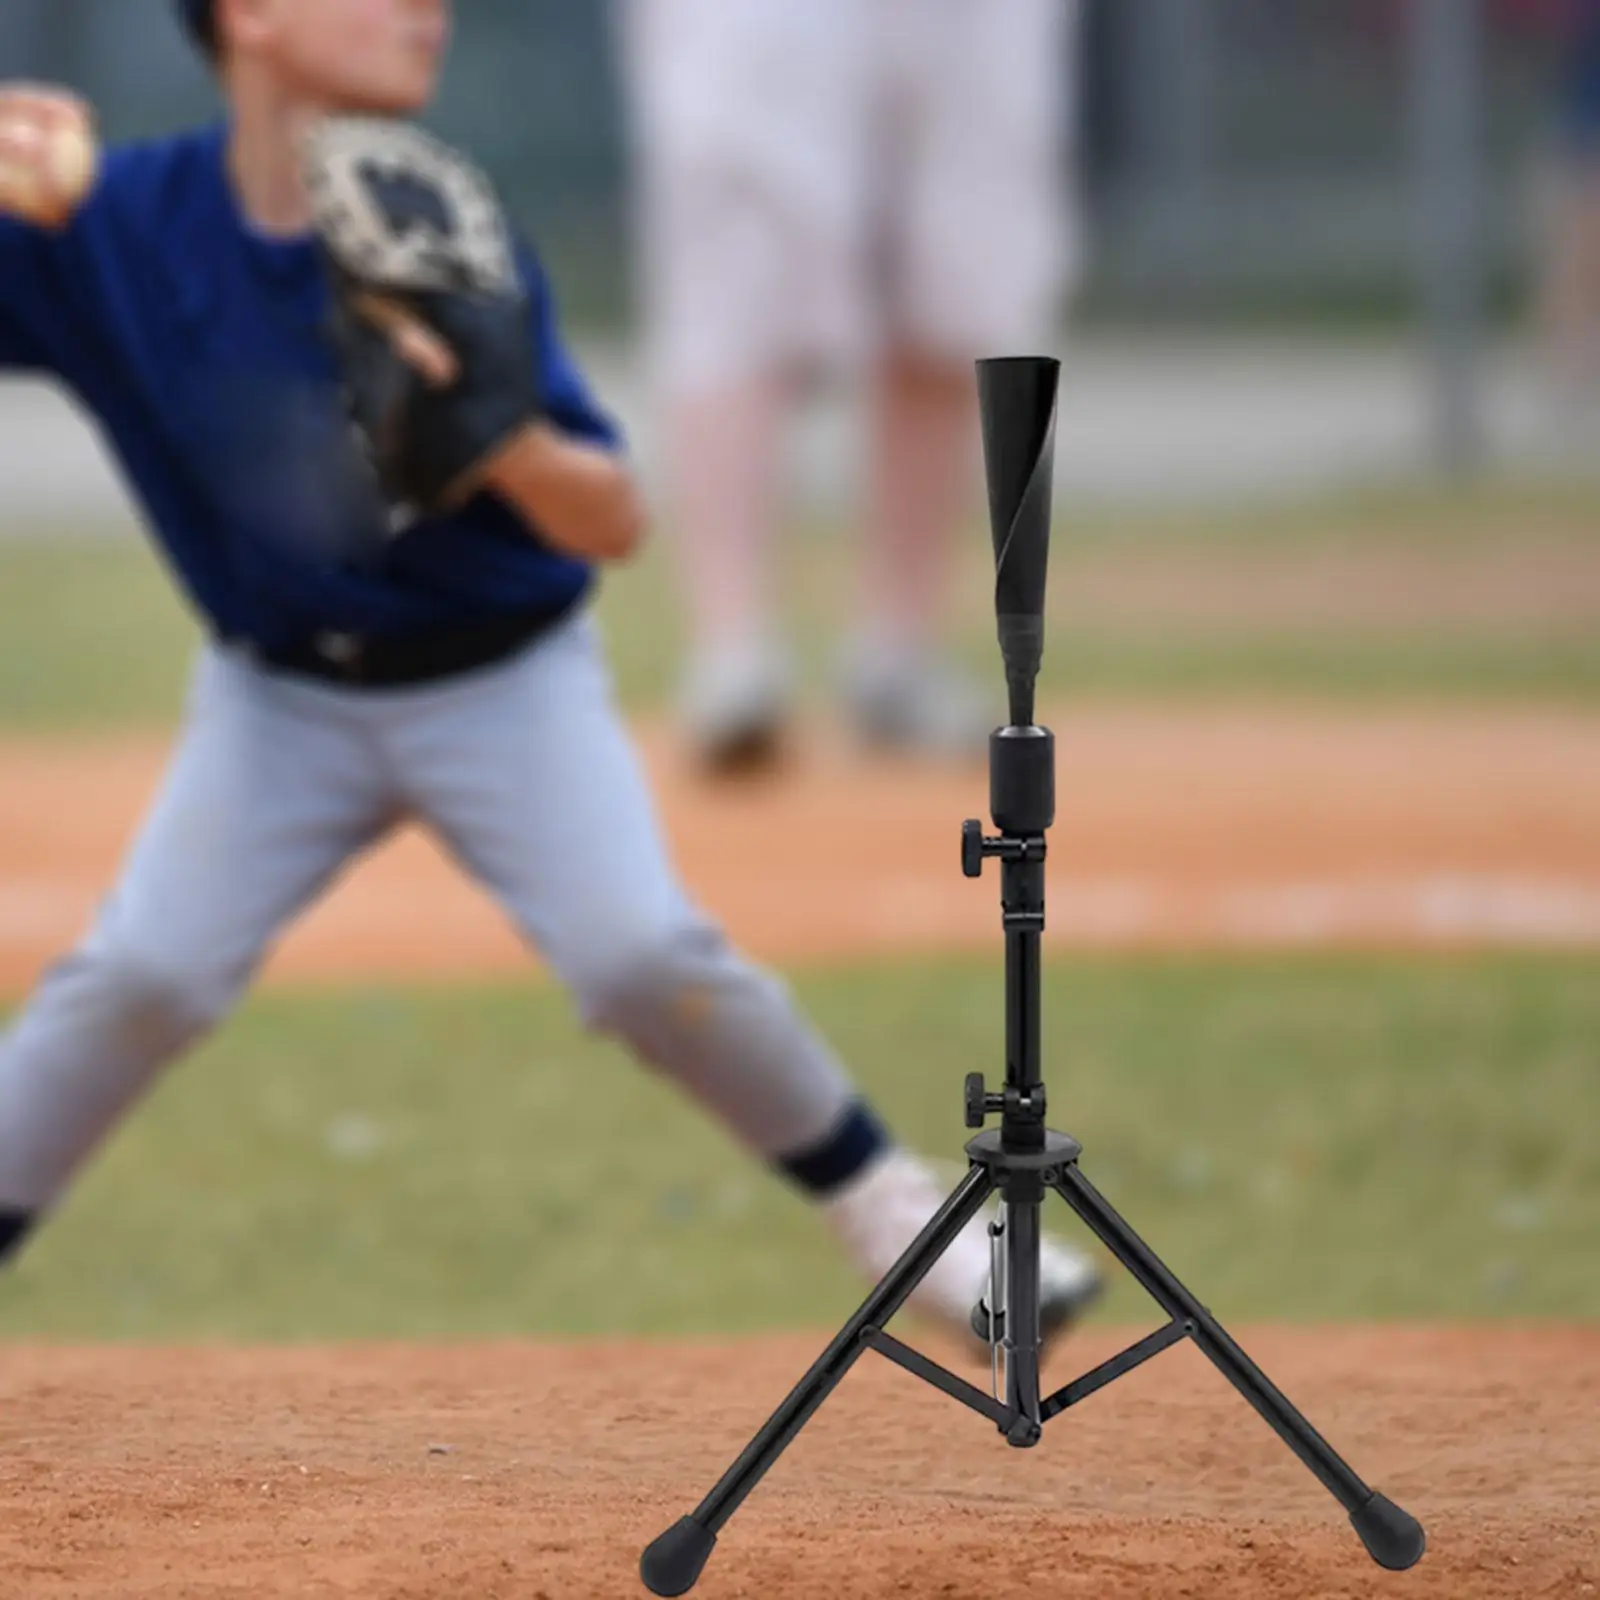 Baseball Batting Tee Adjustable Height Training Equipment Exercise Tee Stand for Men Women Beginner Outdoor Pitching Balls